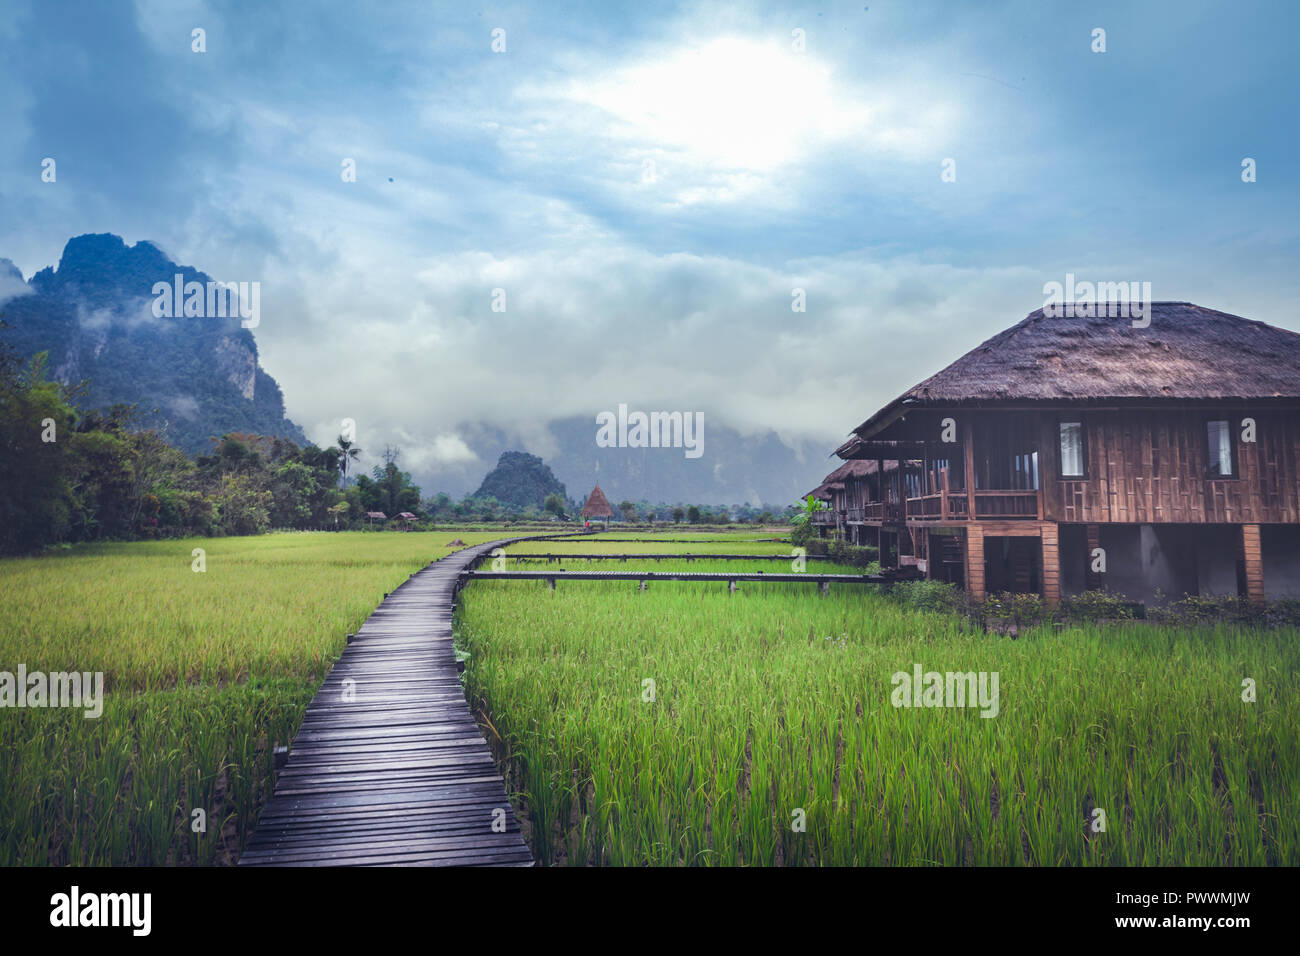 Verdi Risaie, percorsi in legno e case di legno in Vang Vieng, Laos di sera Foto Stock